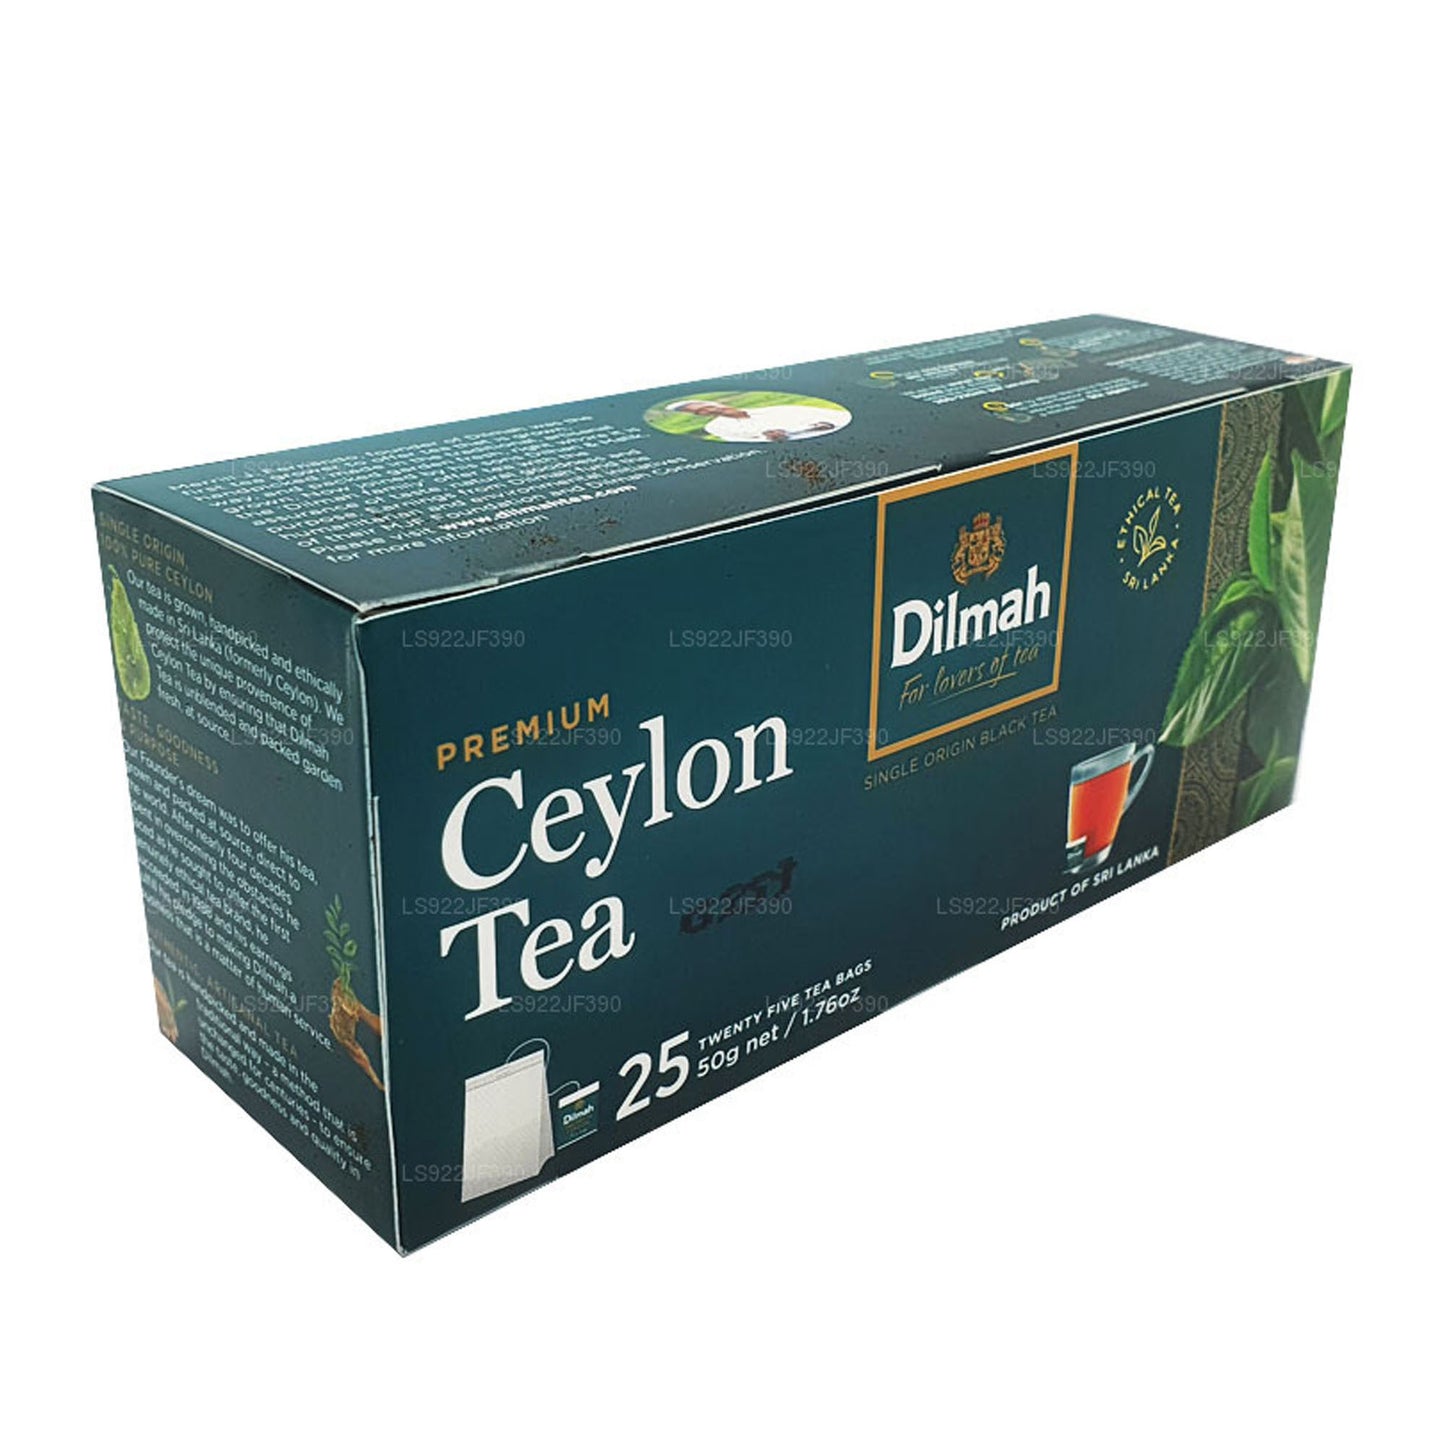 Dilmah 优质锡兰茶